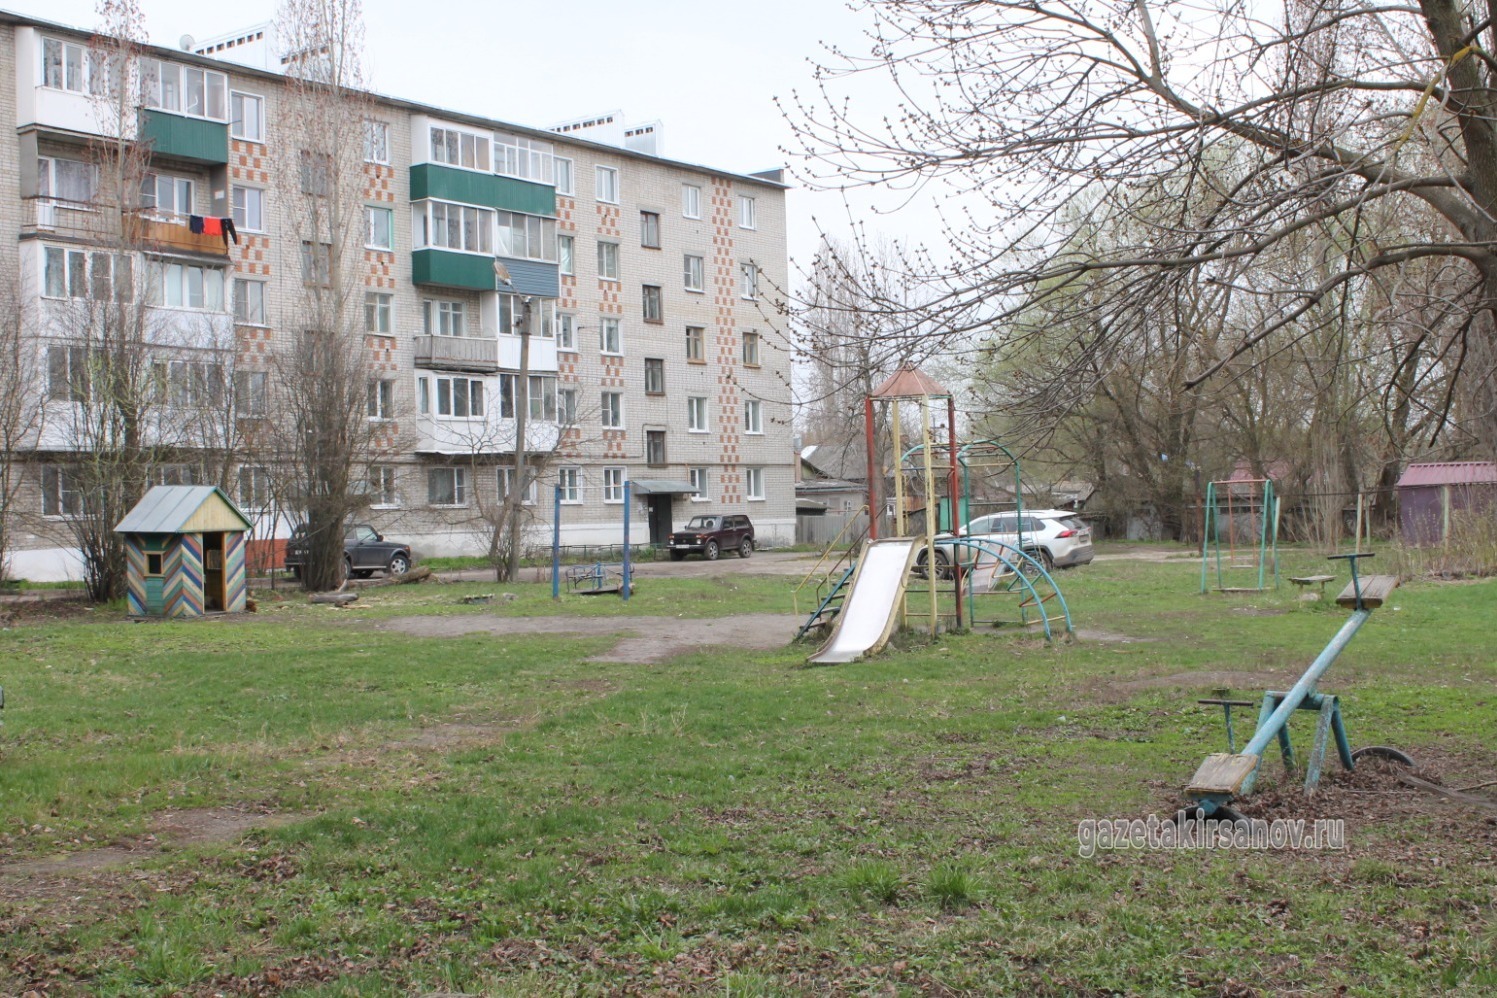 Двор на улице Ухтомского, 33 до благоустройства